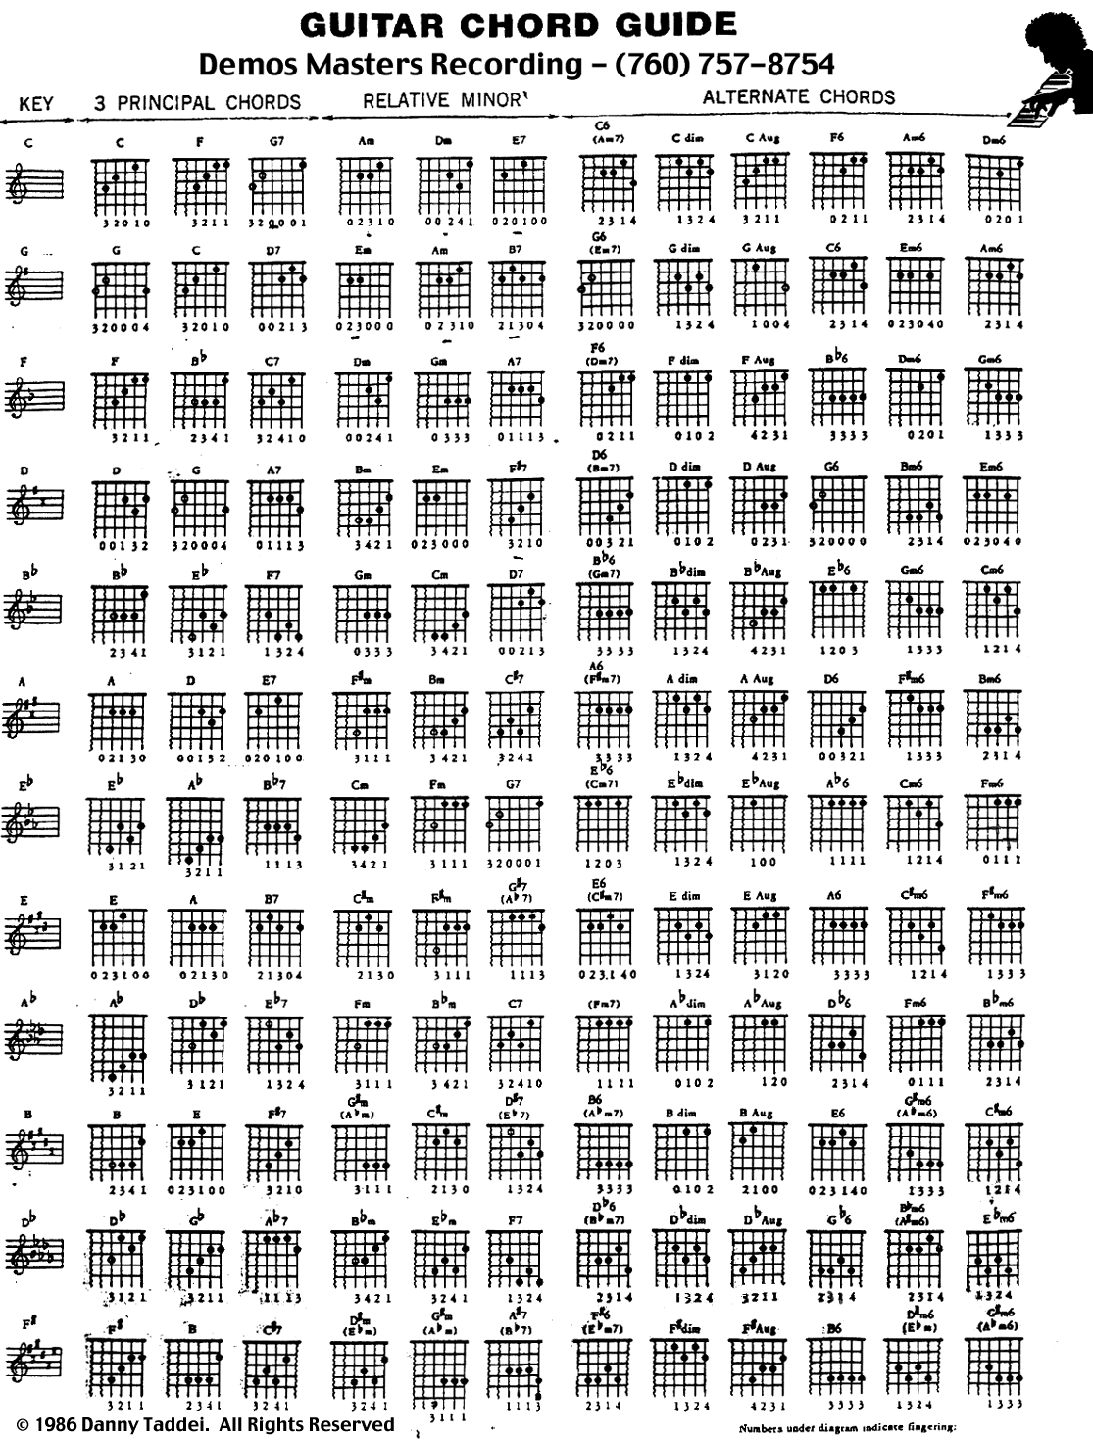 Download guitar chord diagram maker online | tylcumungest1974のブログ